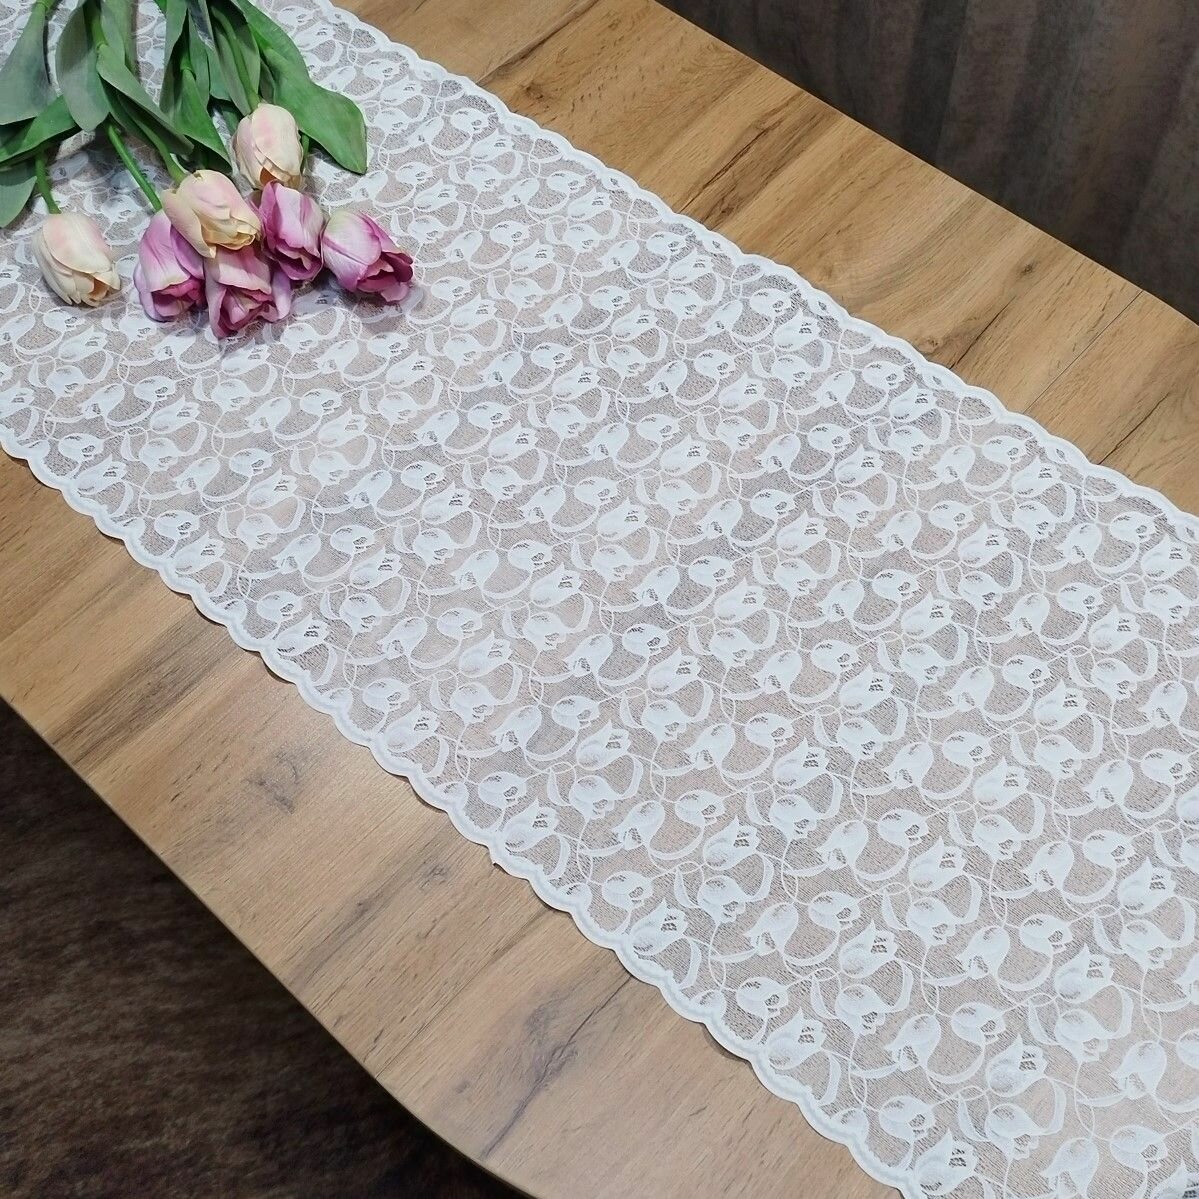 Салфетка-дорожка для стола " Ажур", ширина 50 см. Белая